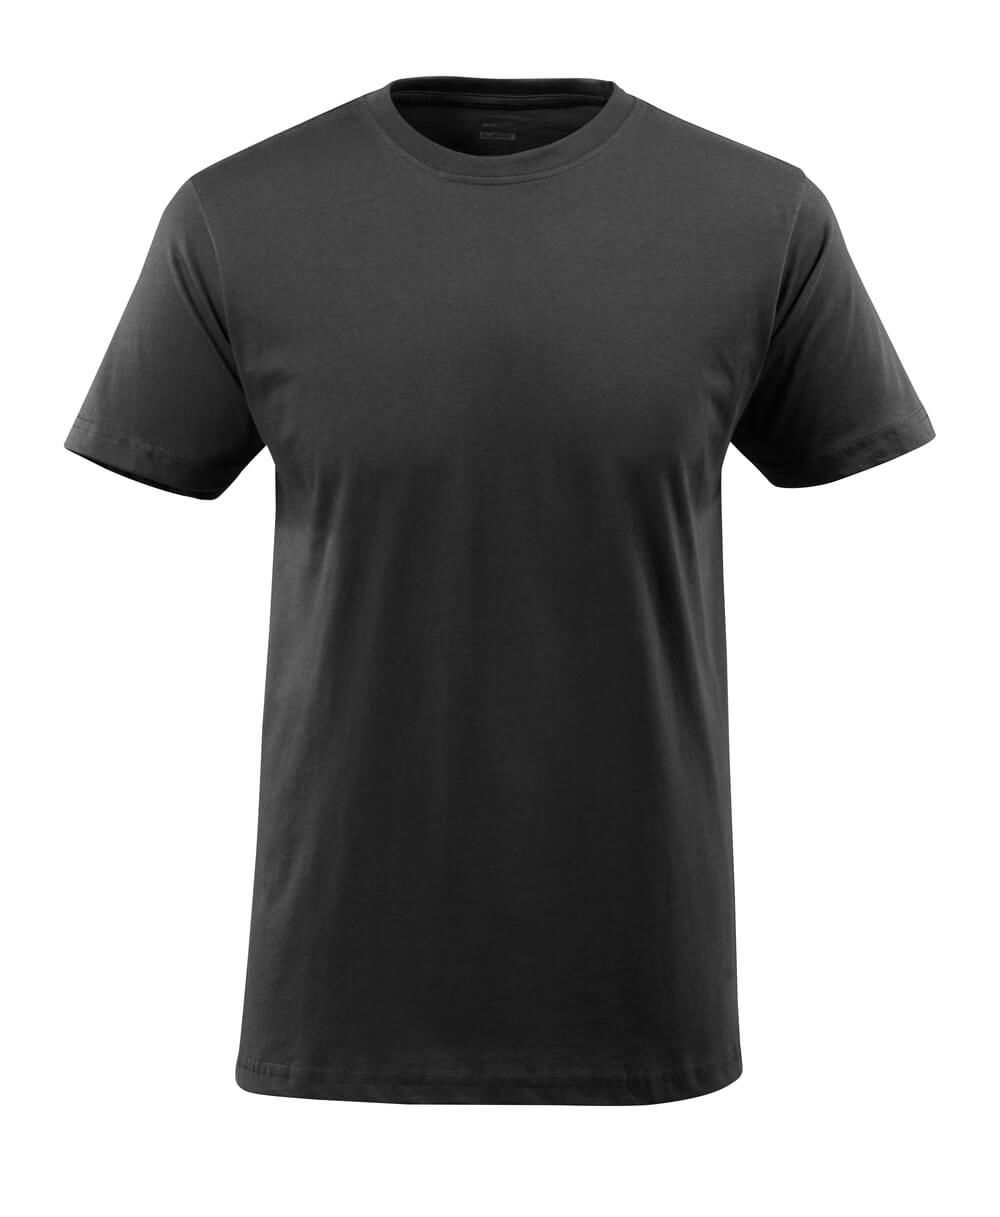 Mascot Workwear Black Cotton Short Sleeve T-Shirt, UK- M, EUR- M